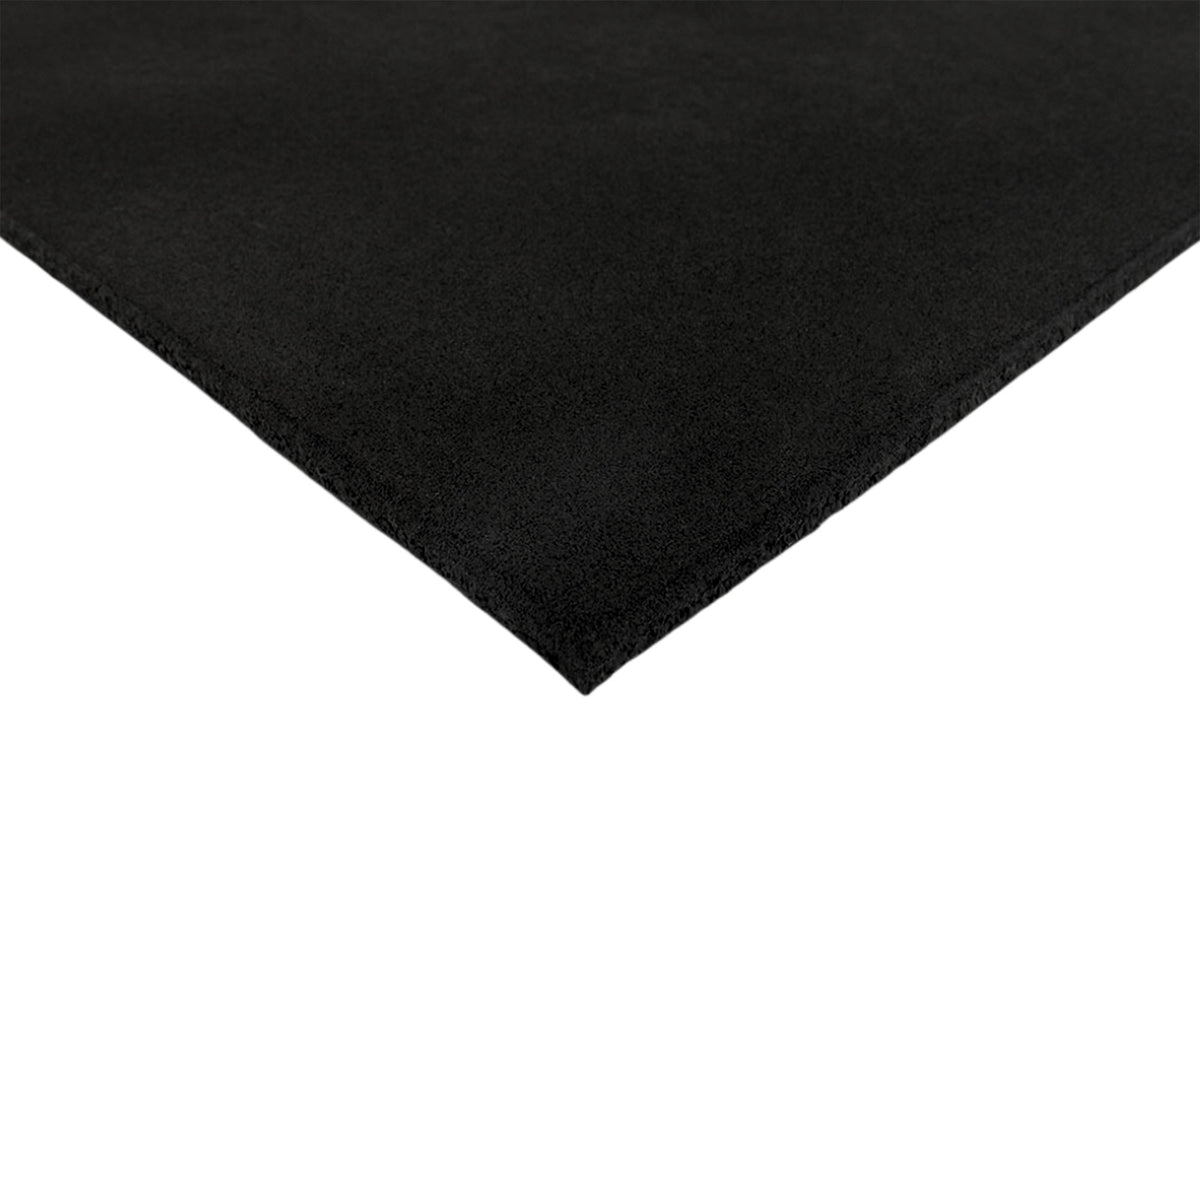 Rubber Gym Flooring Tile Plain Black